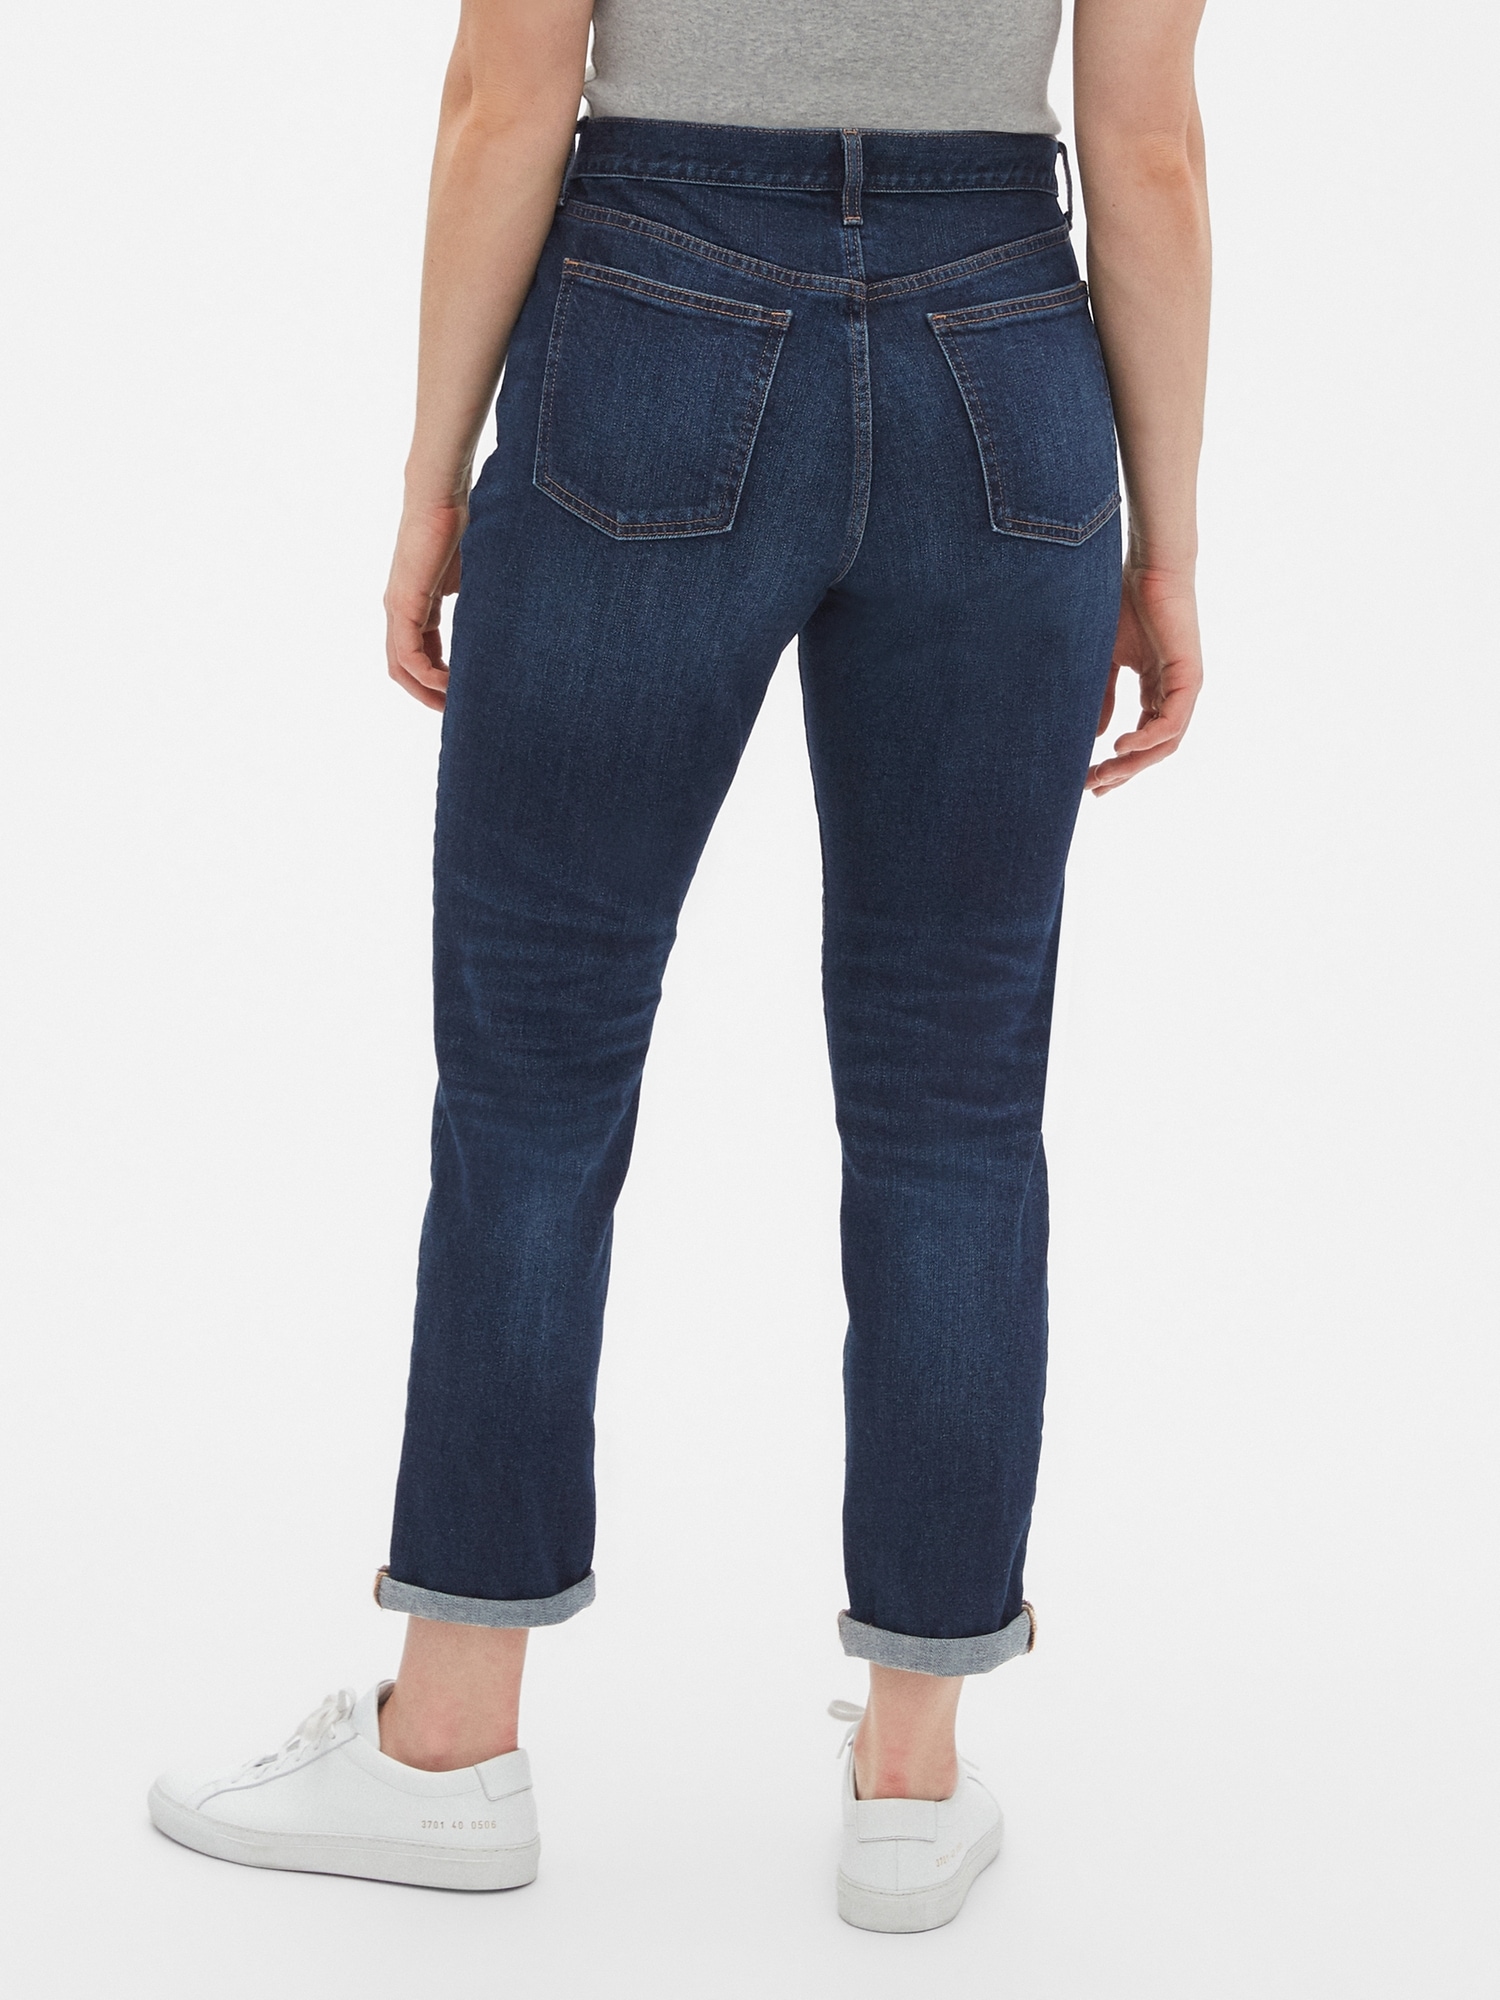 gap mid rise girlfriend jeans